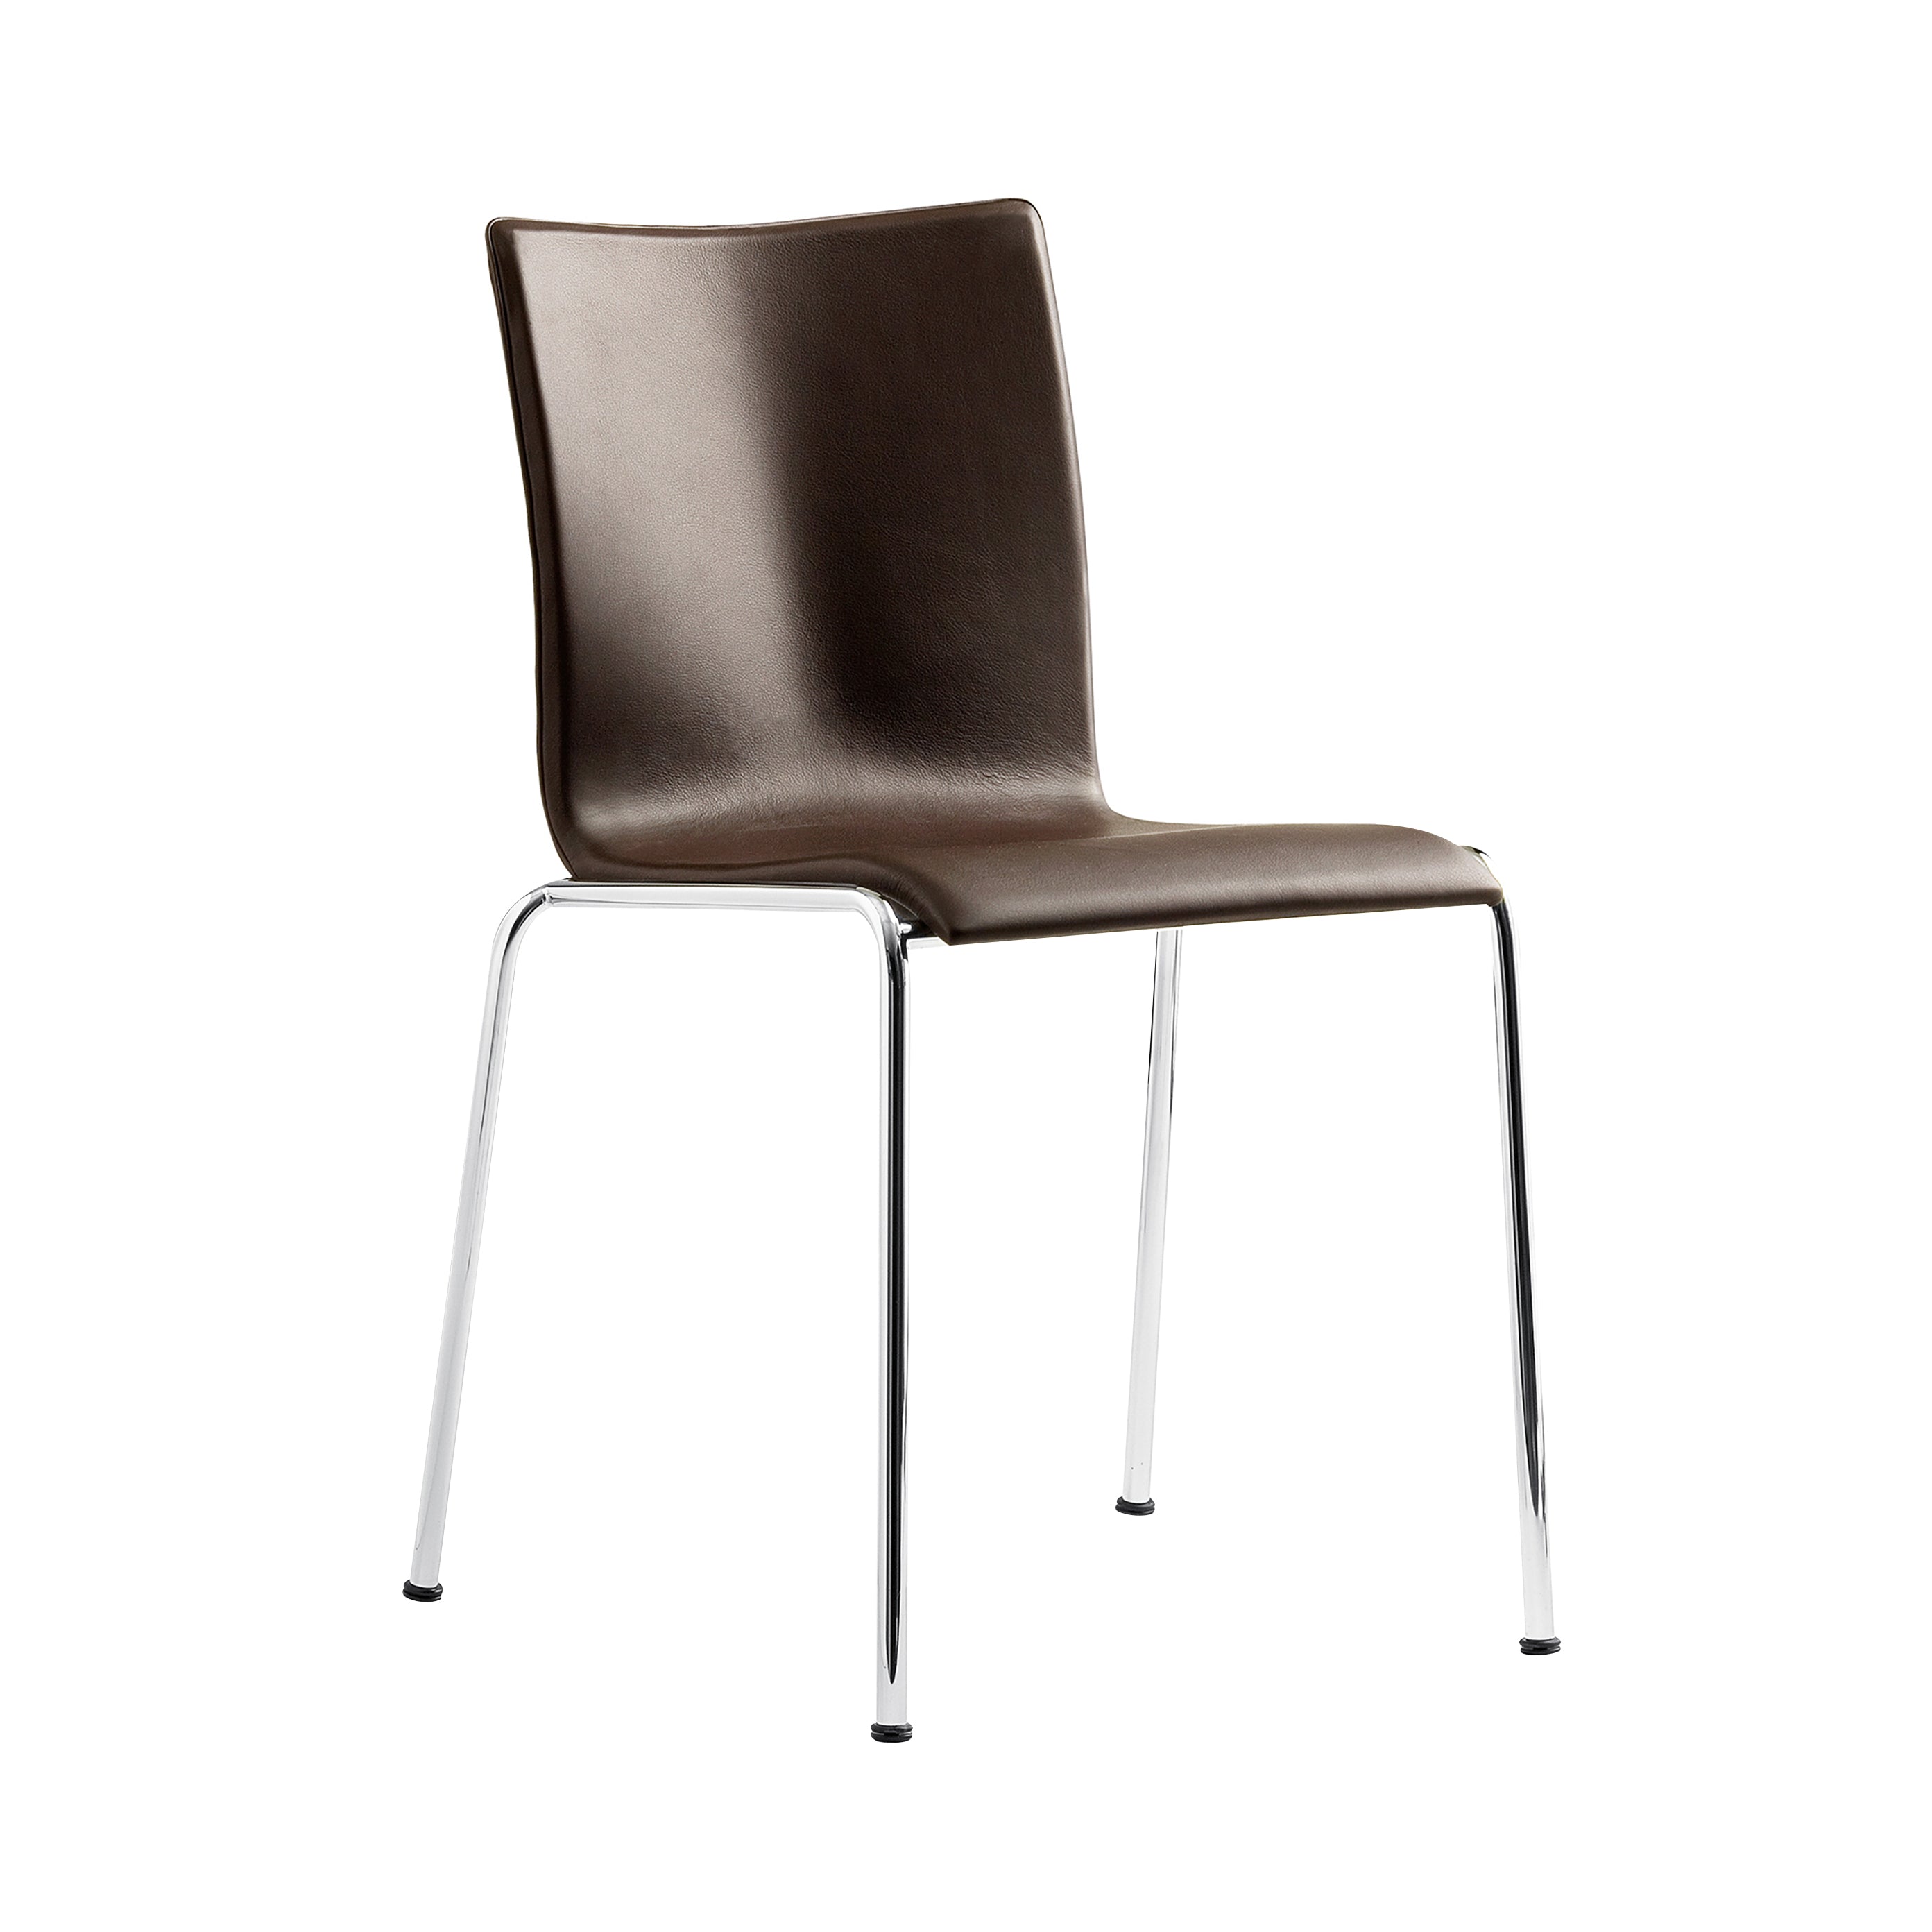 Chairik 101 Chair: 4-Legs + Full Upholstered + Polished Chrome